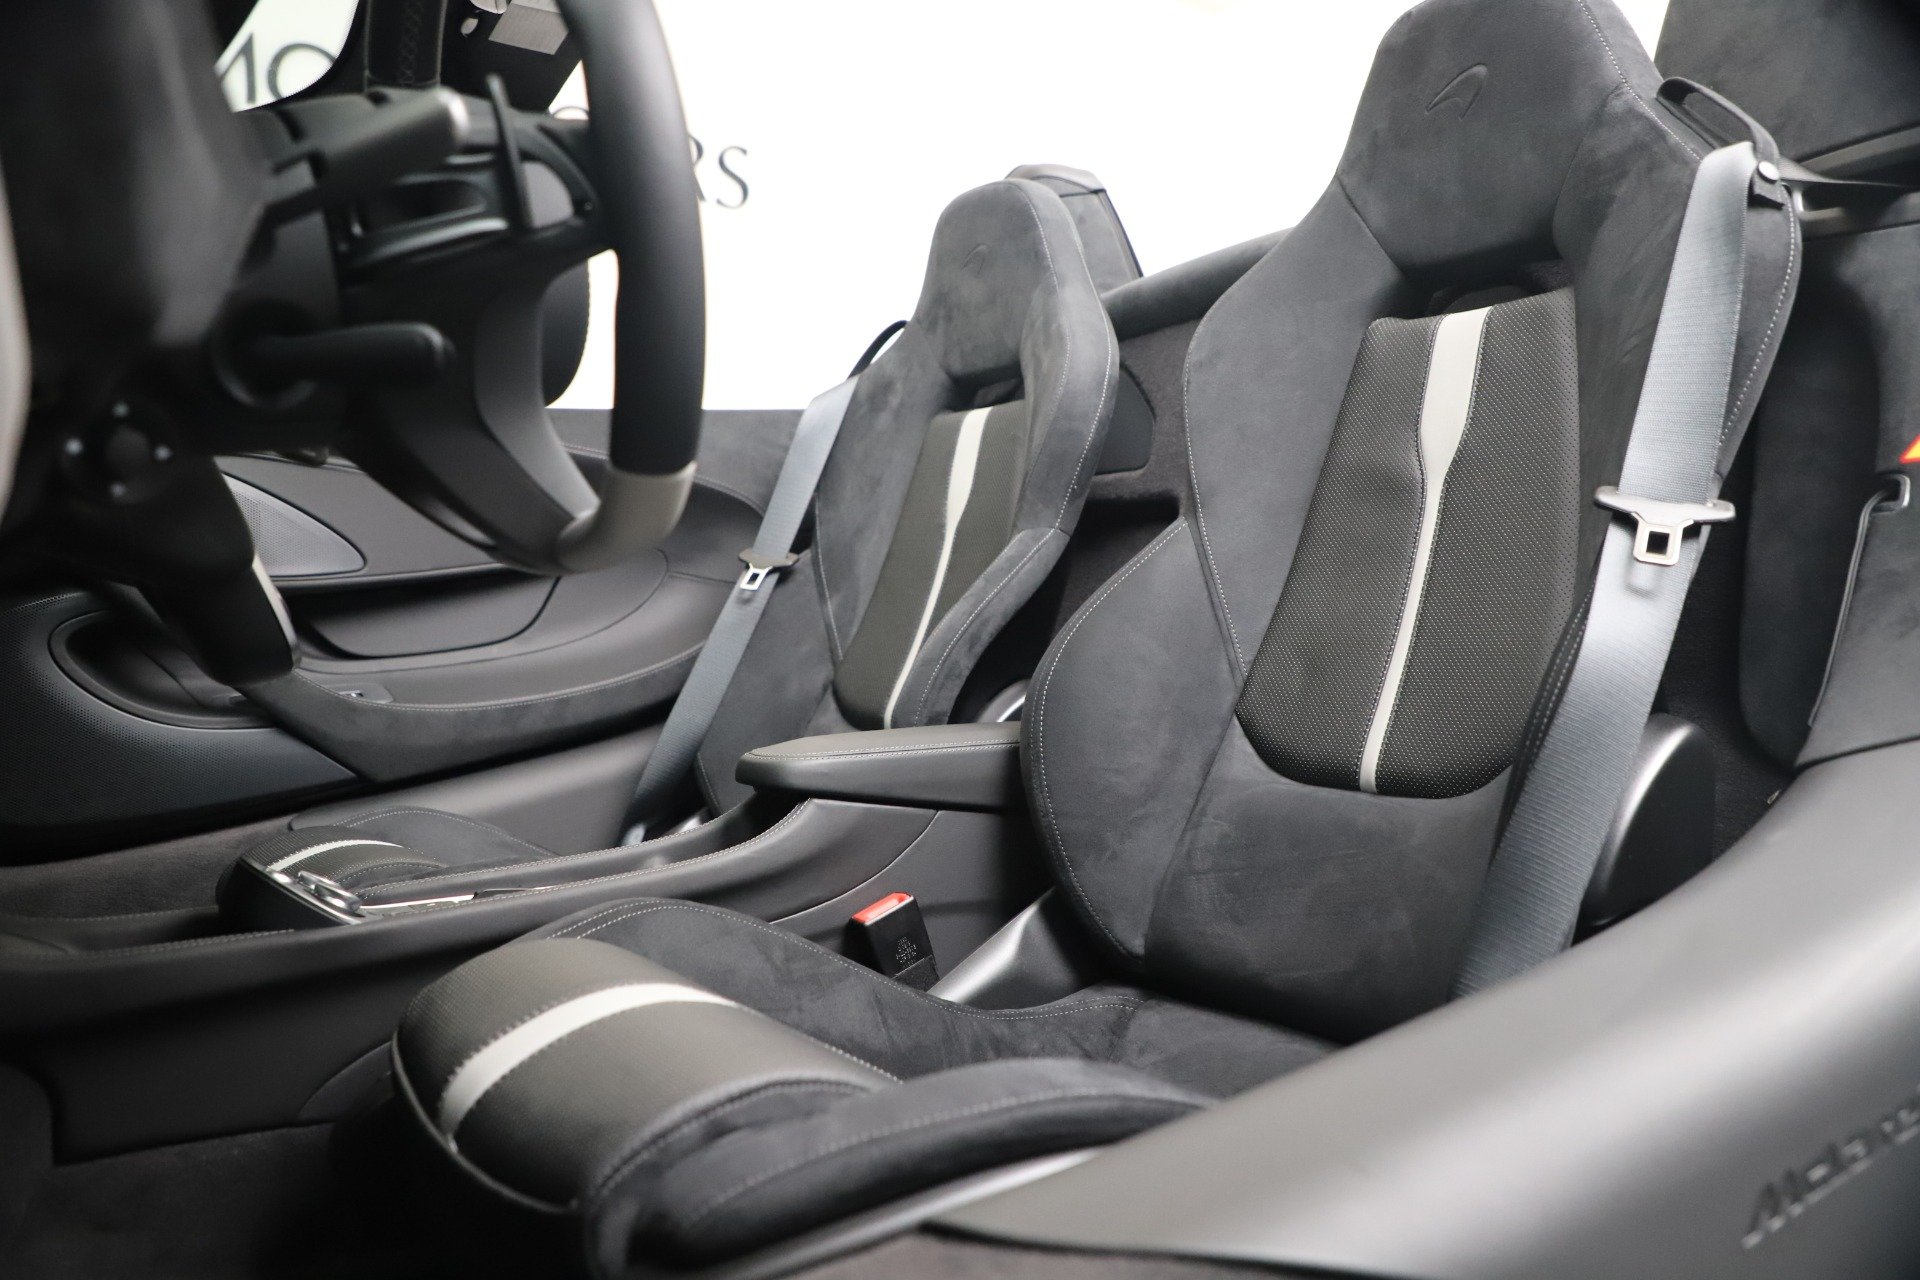 McLaren 570 interior - Seats